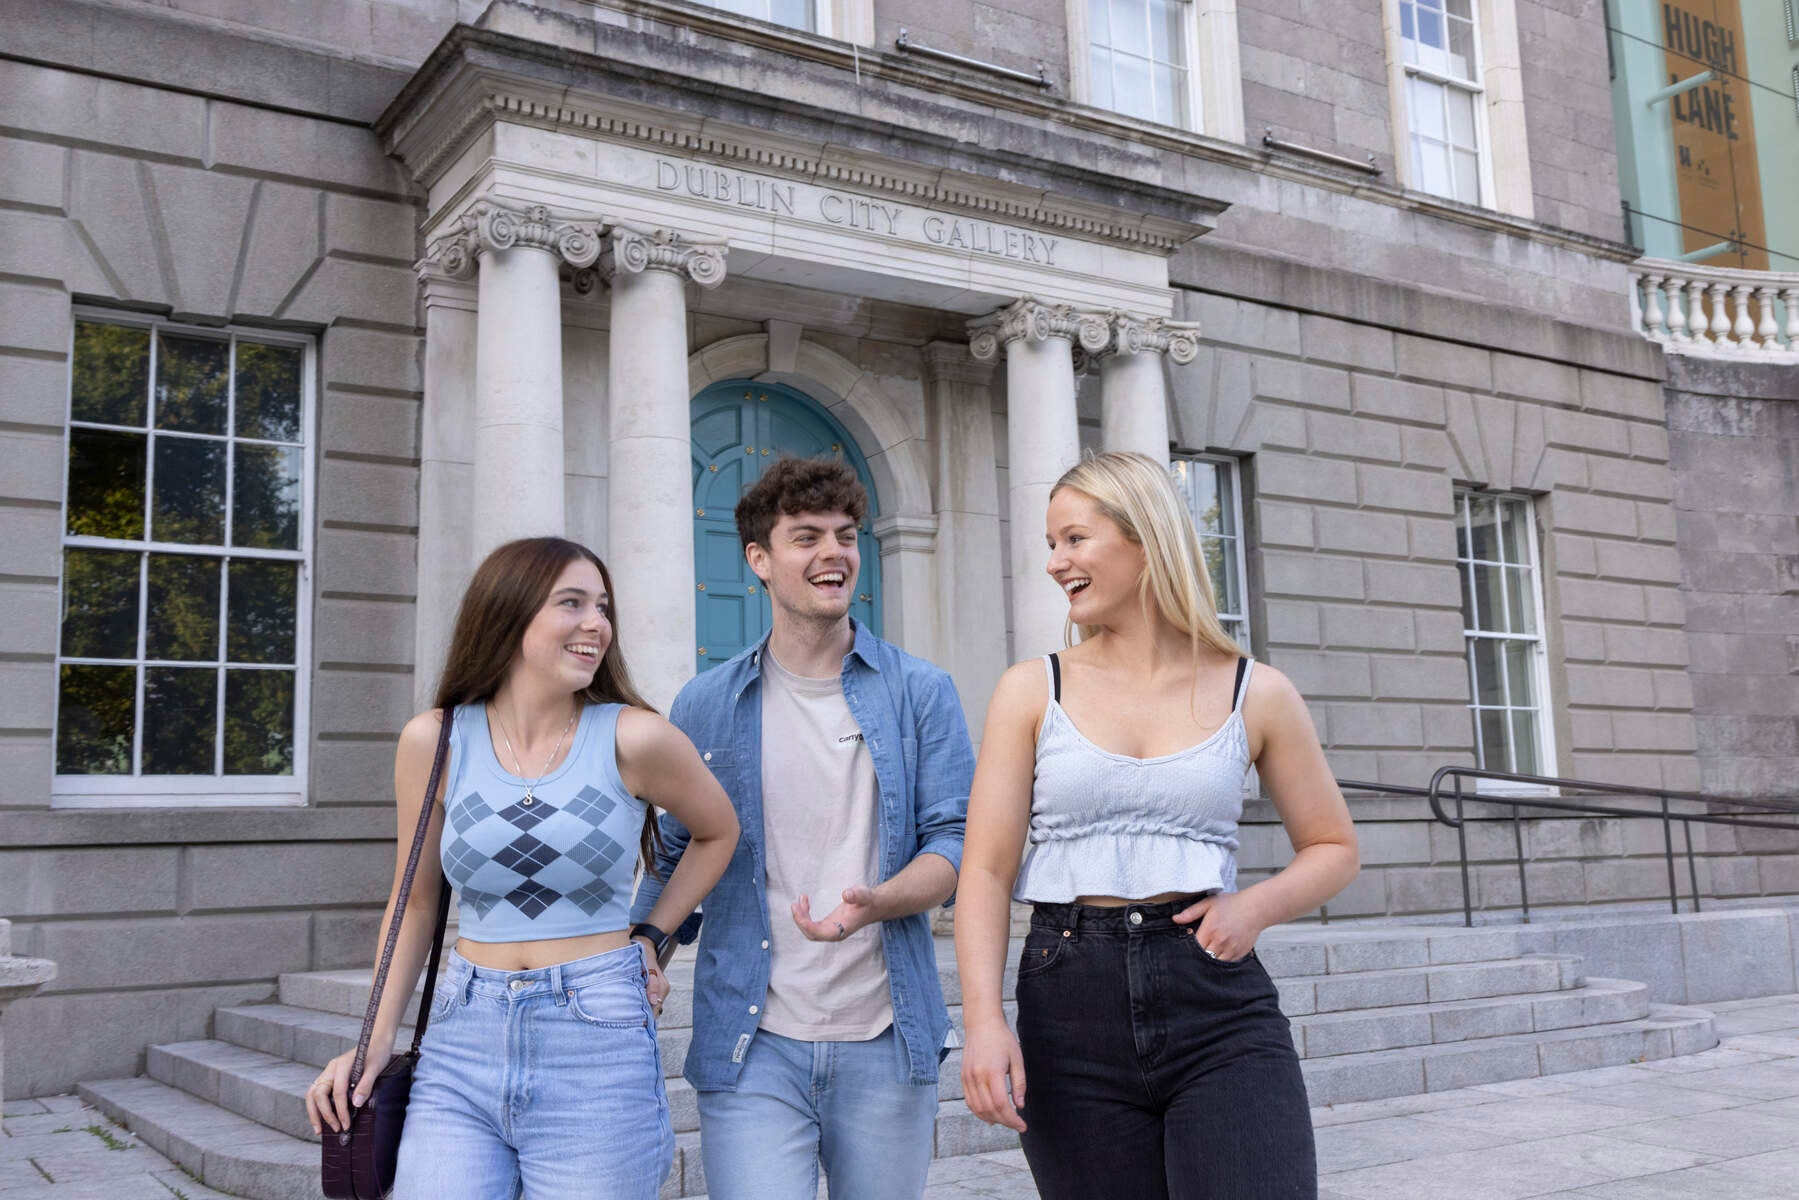 Three friends leaving the Hugh Lane Gallery in Dublin.